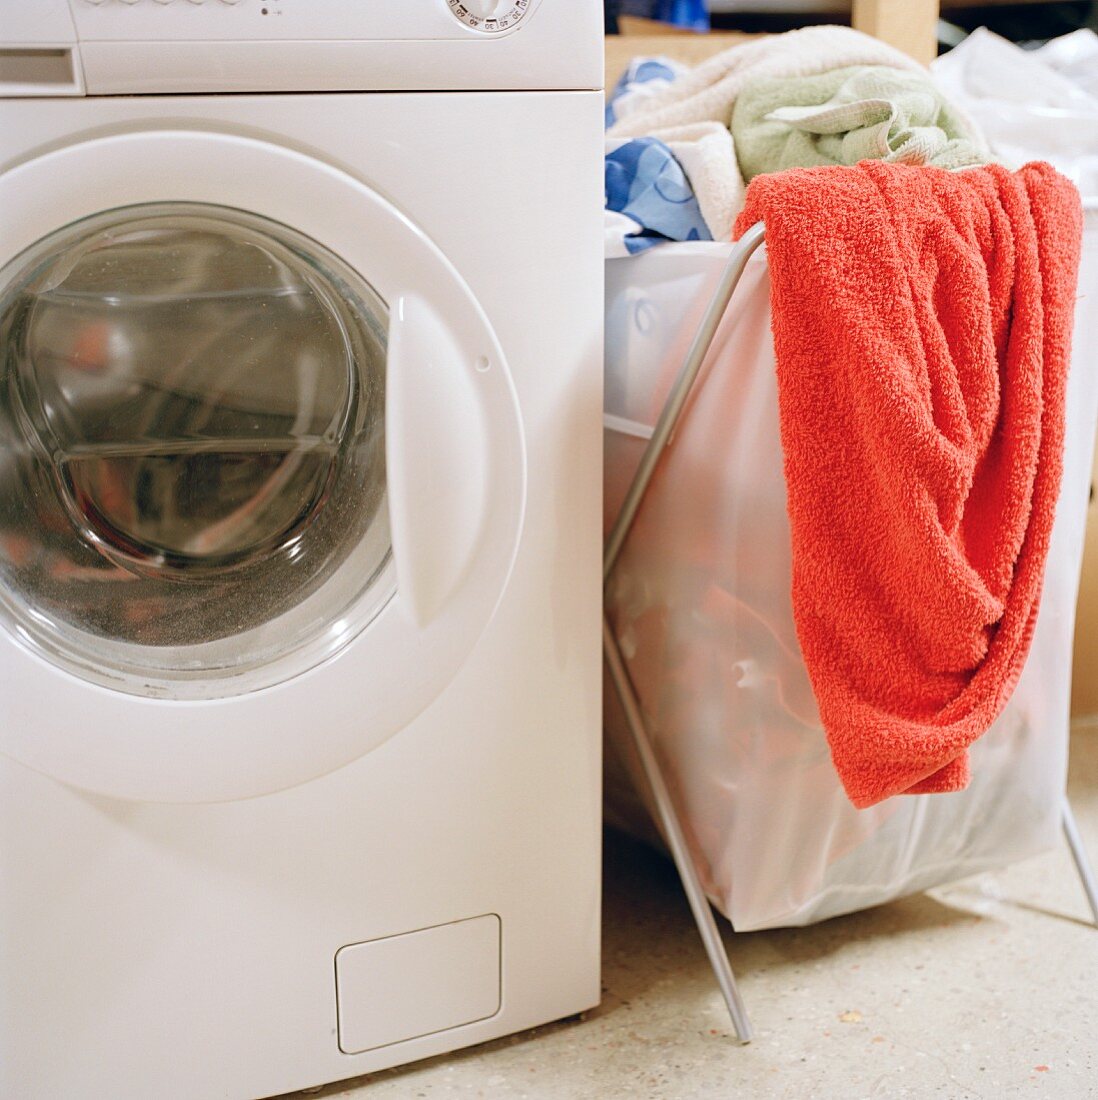 Laundry basket filled with washing next to a washing machine